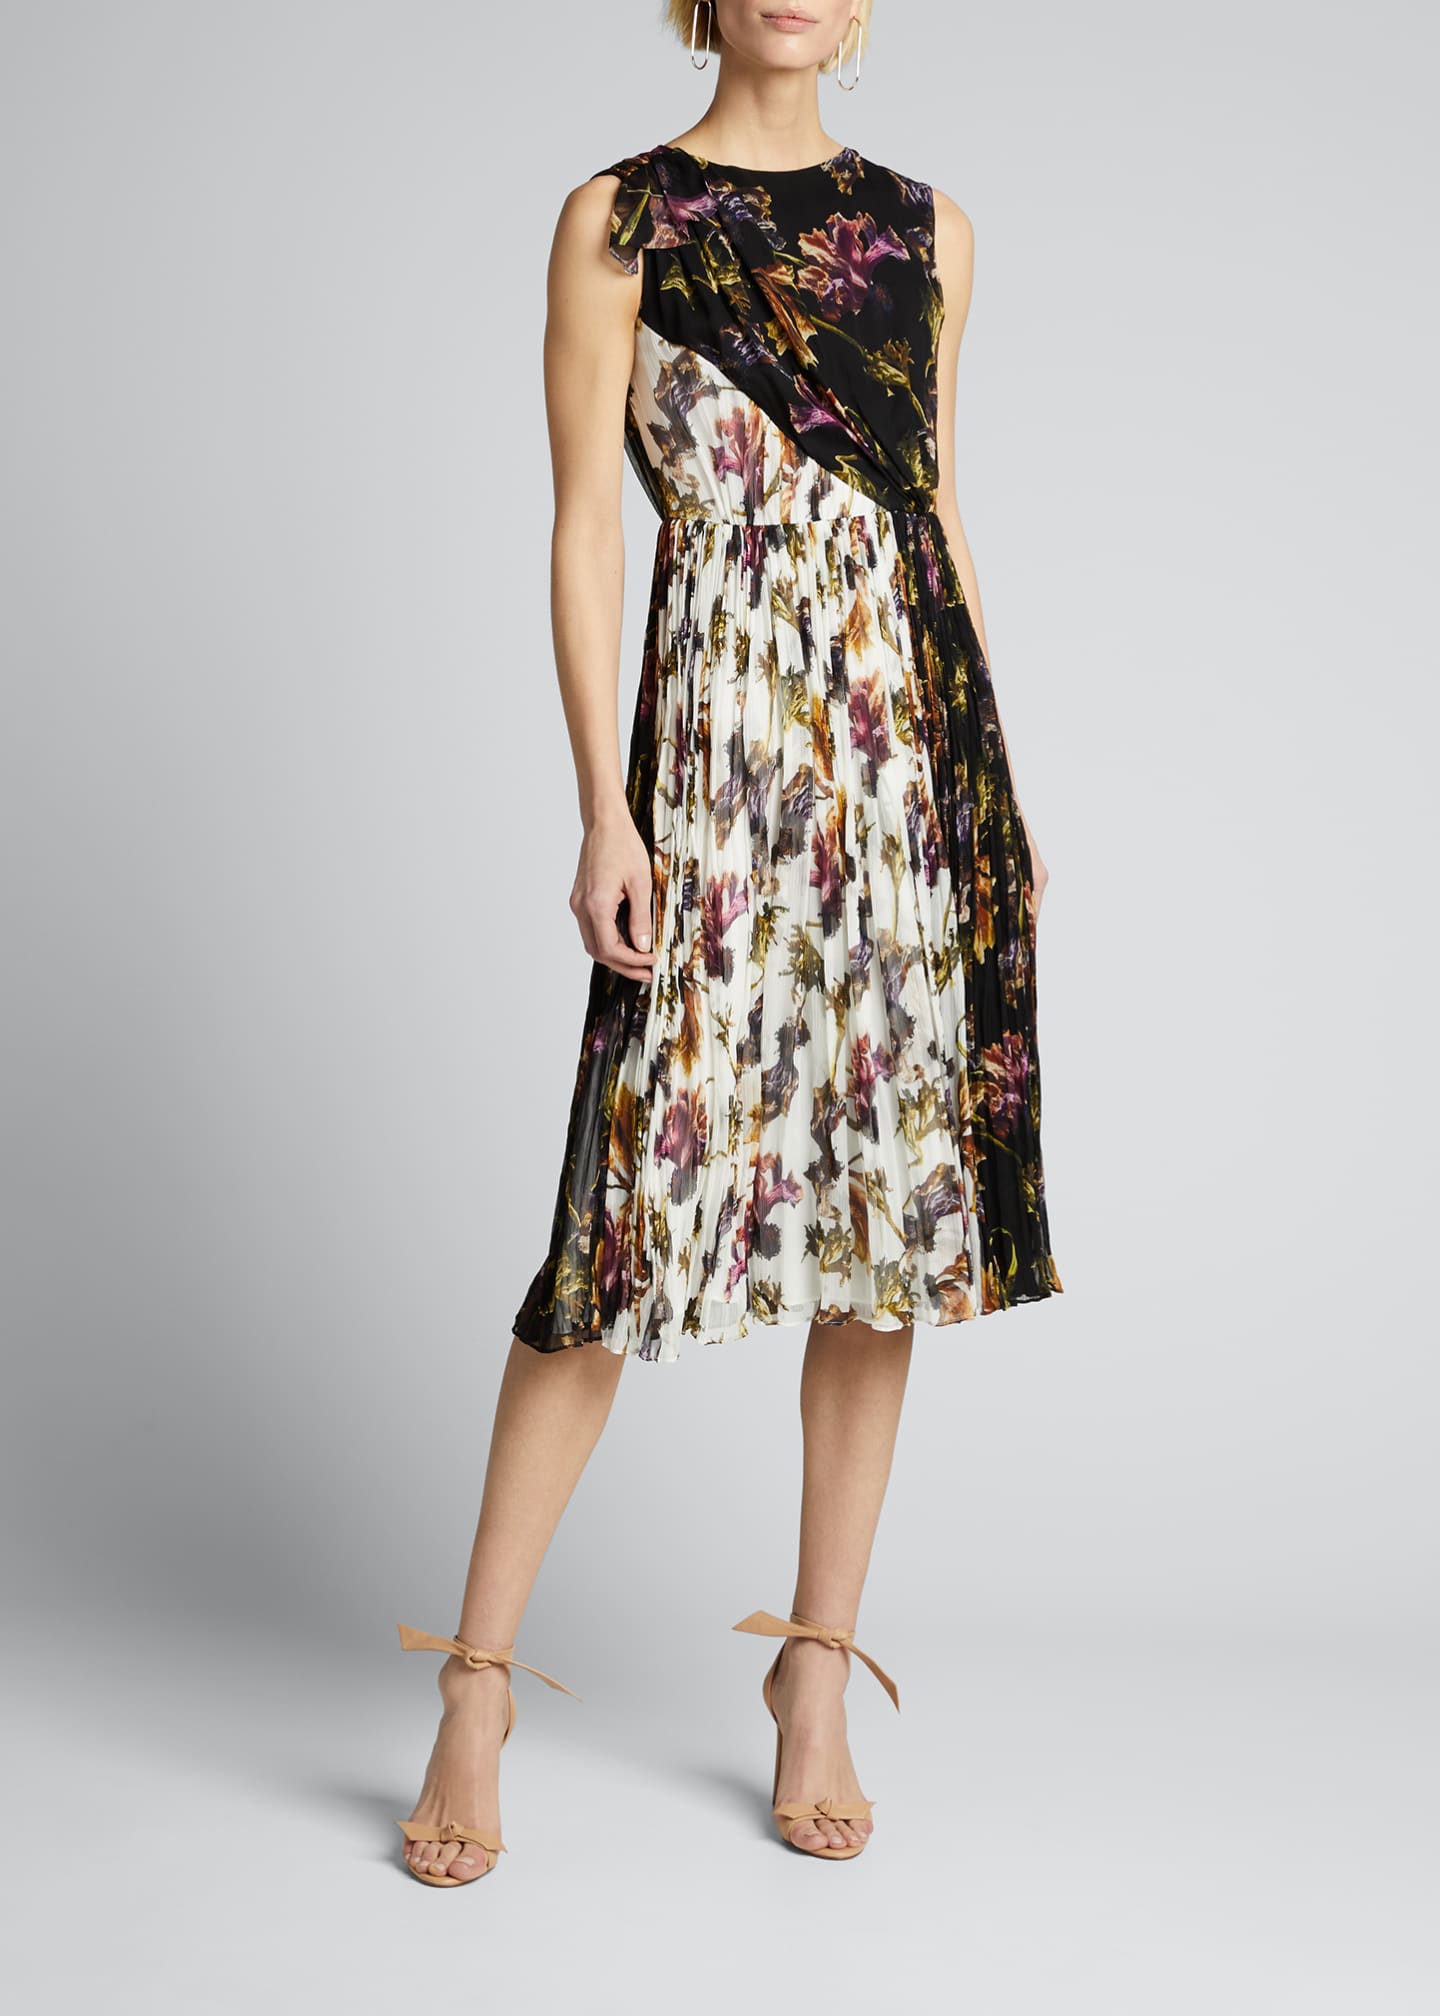 Jason Wu Collection Floral-Print Crinkled Chiffon Dress - Bergdorf Goodman